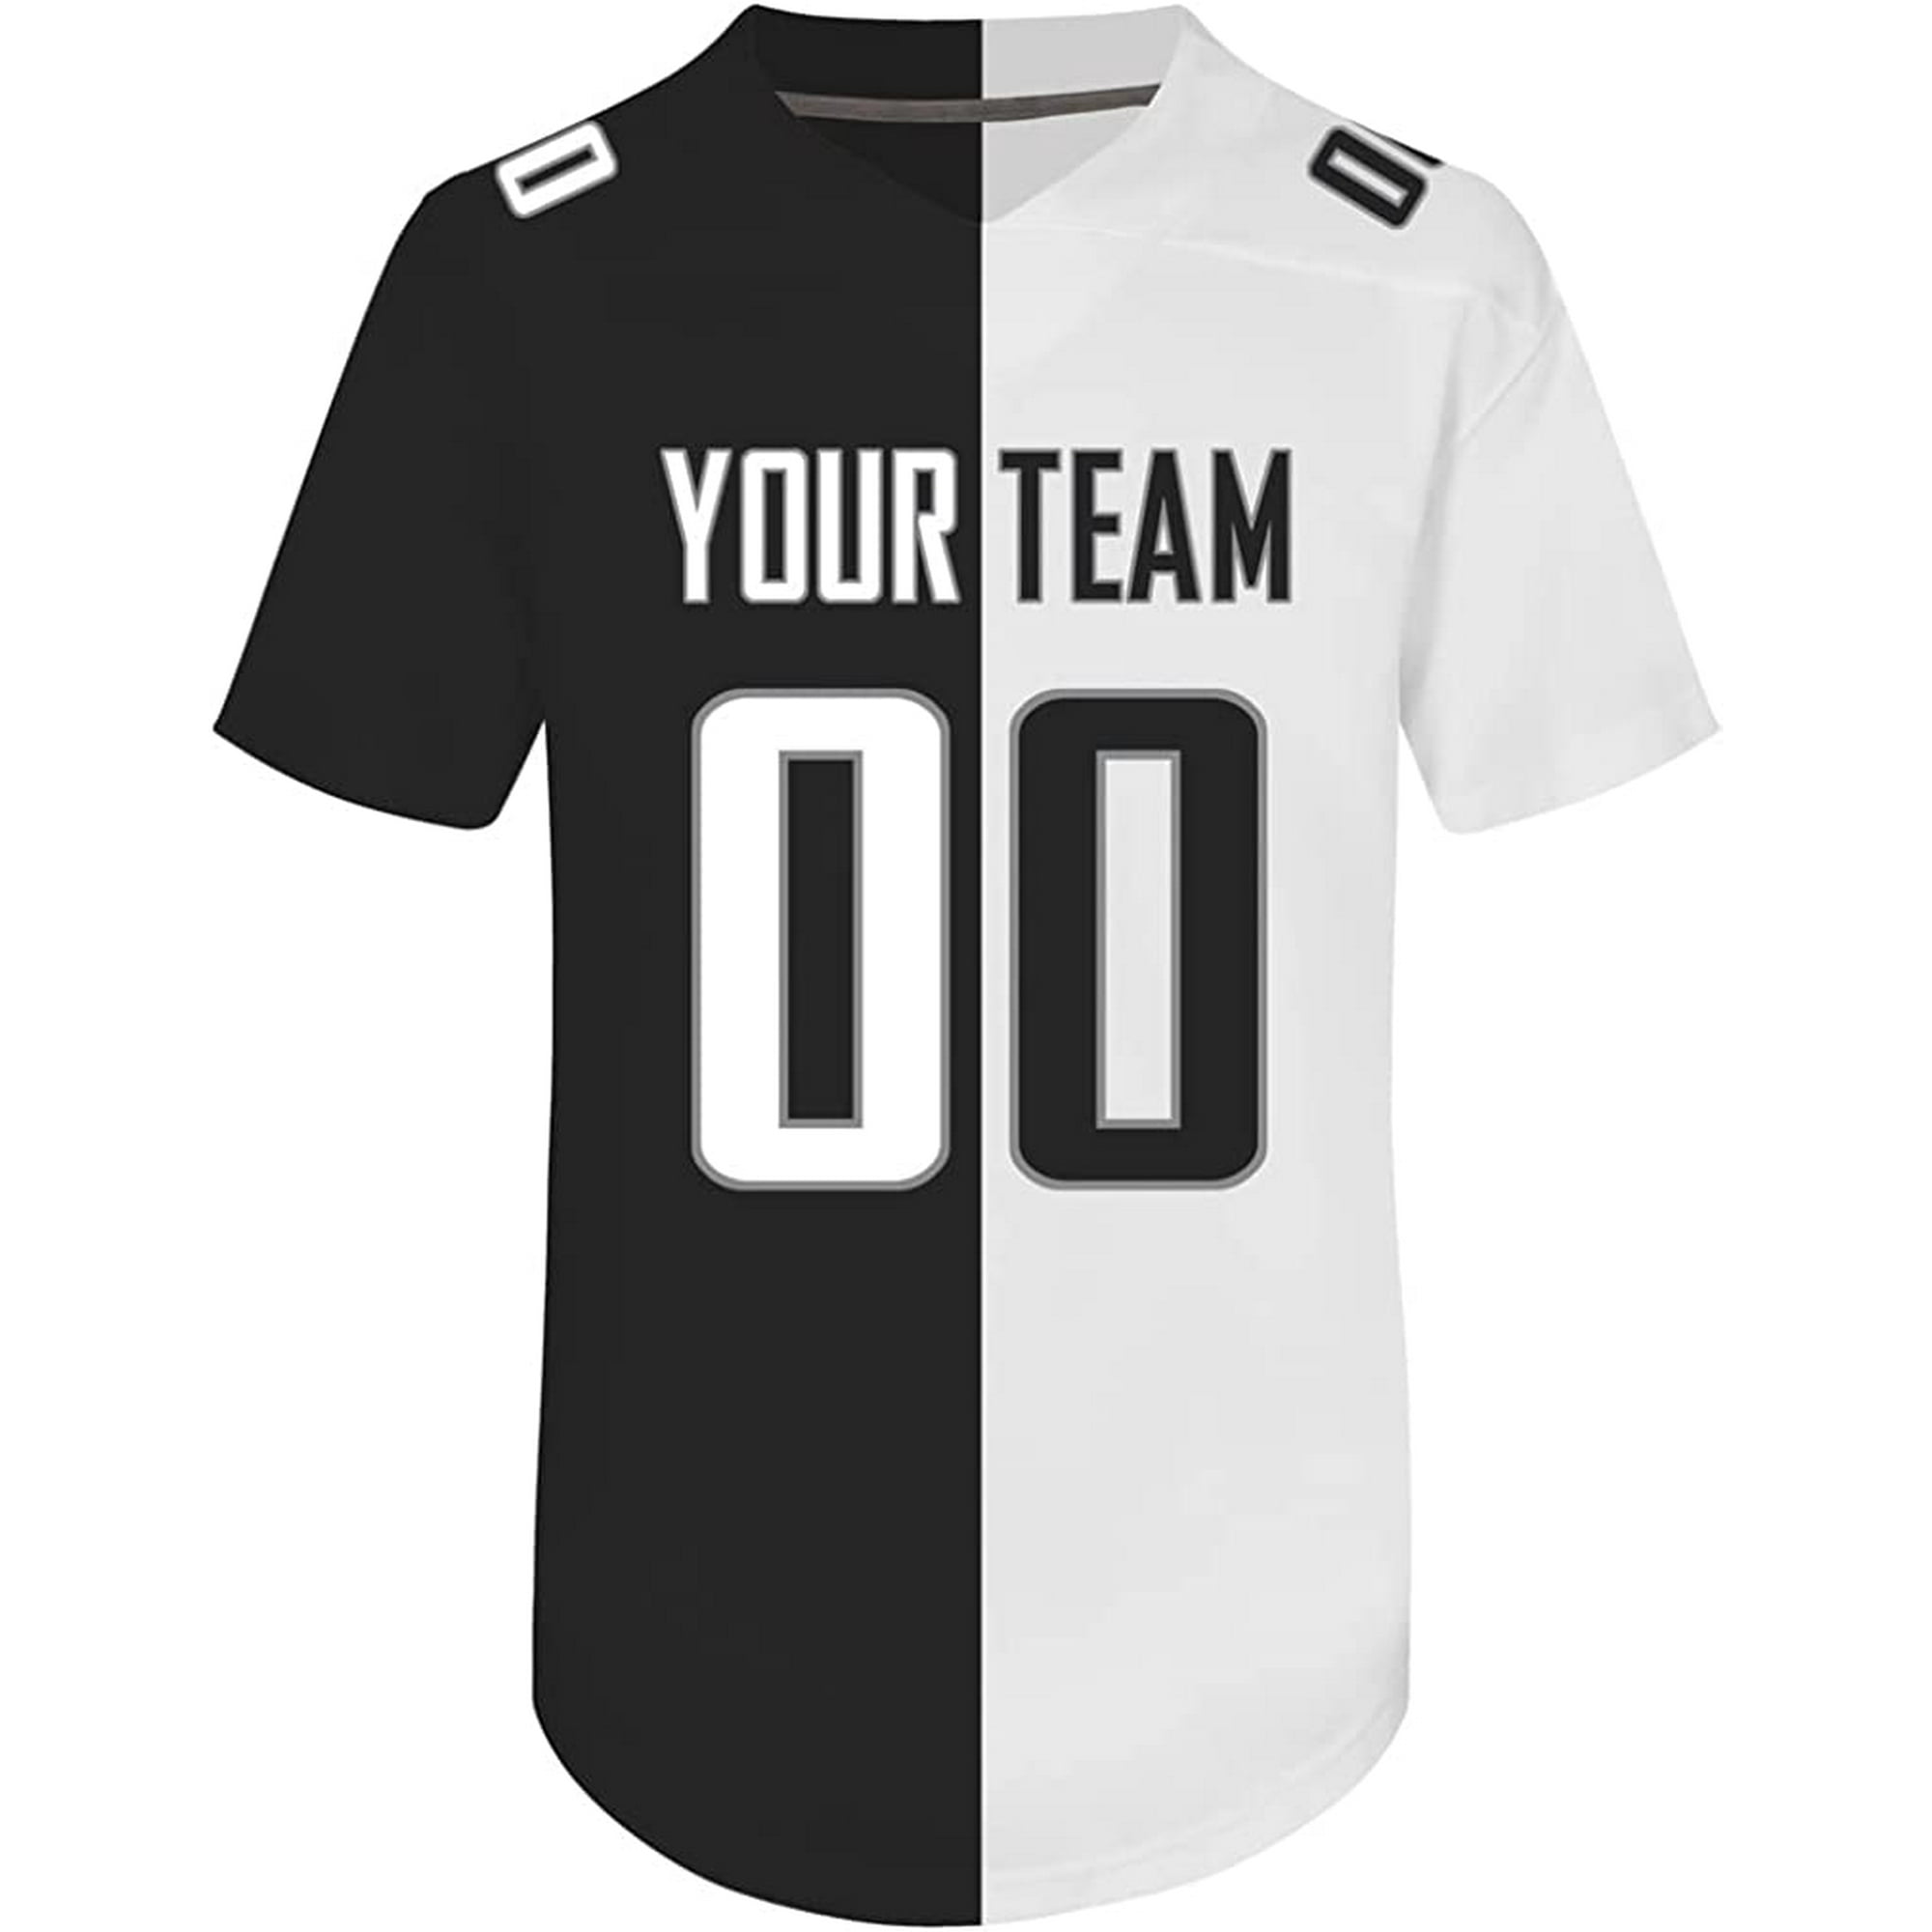 Custom Jerseys For Your Team